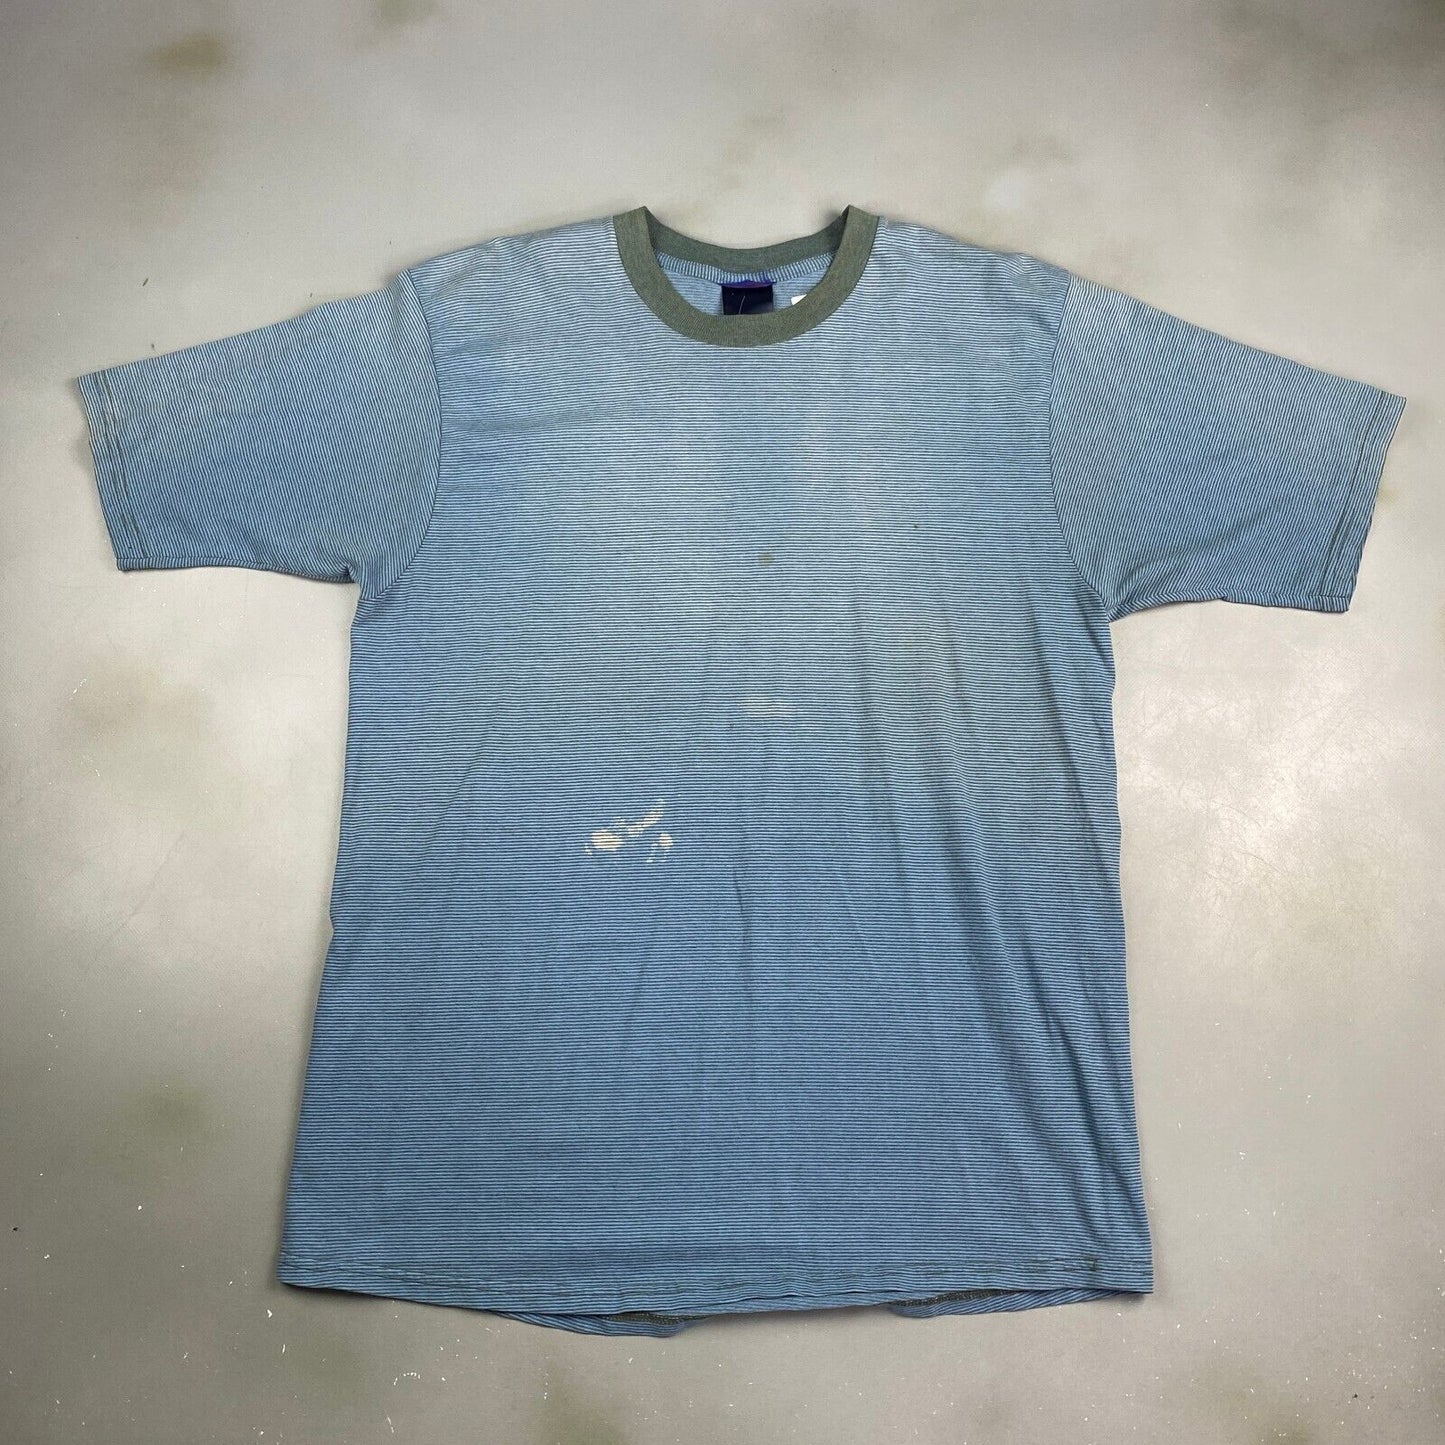 VINTAGE 90s Faded Striped Blue Ringer T-Shirt sz Large Adult